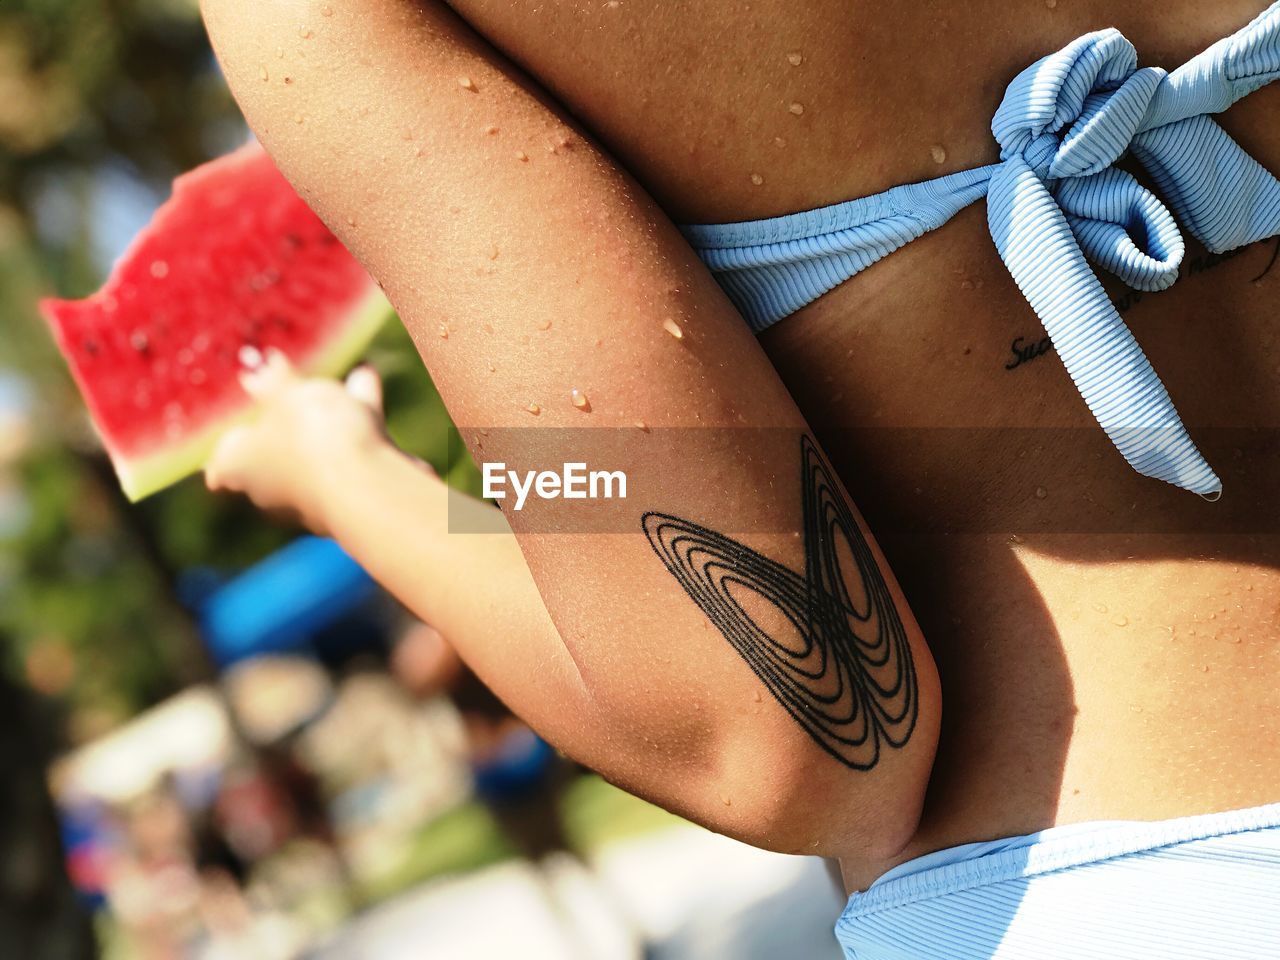 Midsection of teenage girl in bikini with tattoo on hand